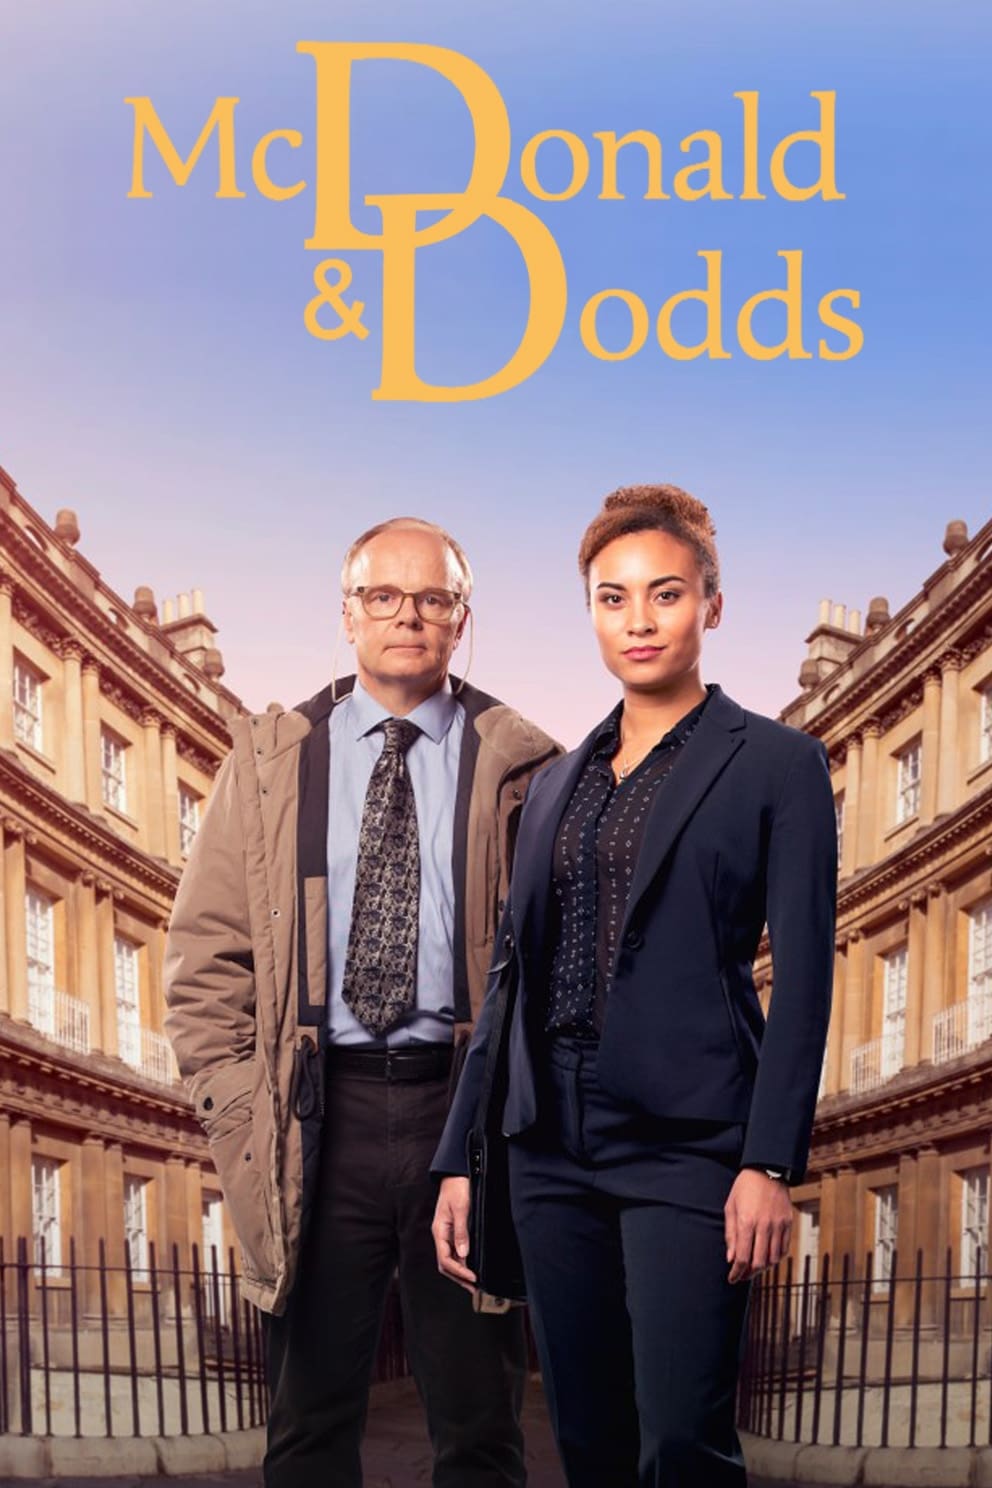 [ITV] McDonald & Dodds (2020) S03 1080p DD2 0 AVC H 264-NLsubsOnly (retail)